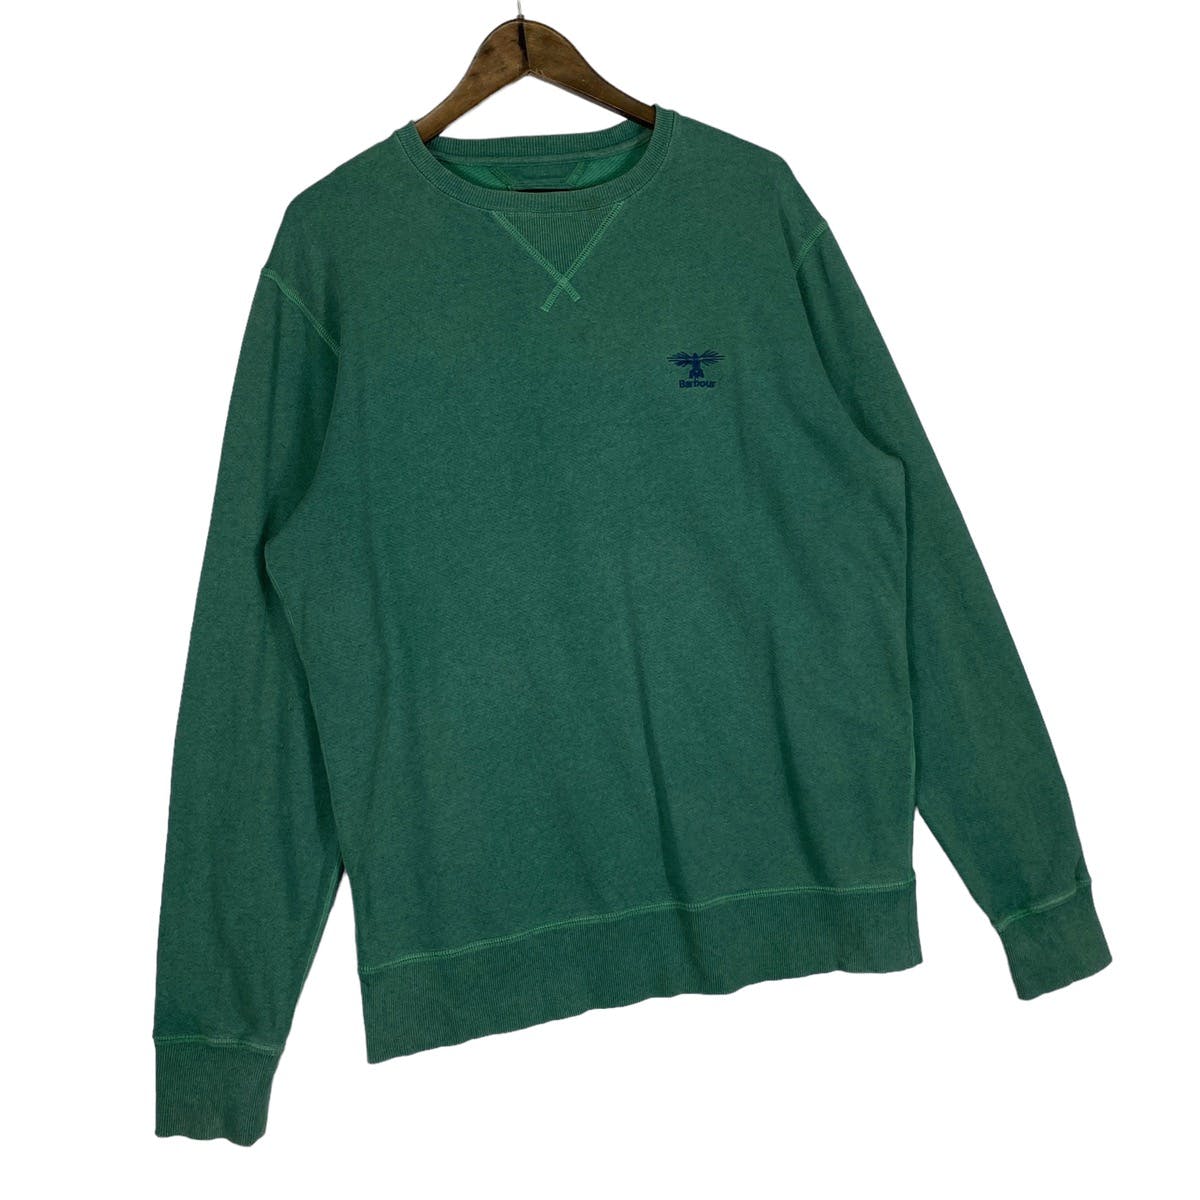 Vintage Barbour Sweatshirt Crewneck Made In Portugal - 4